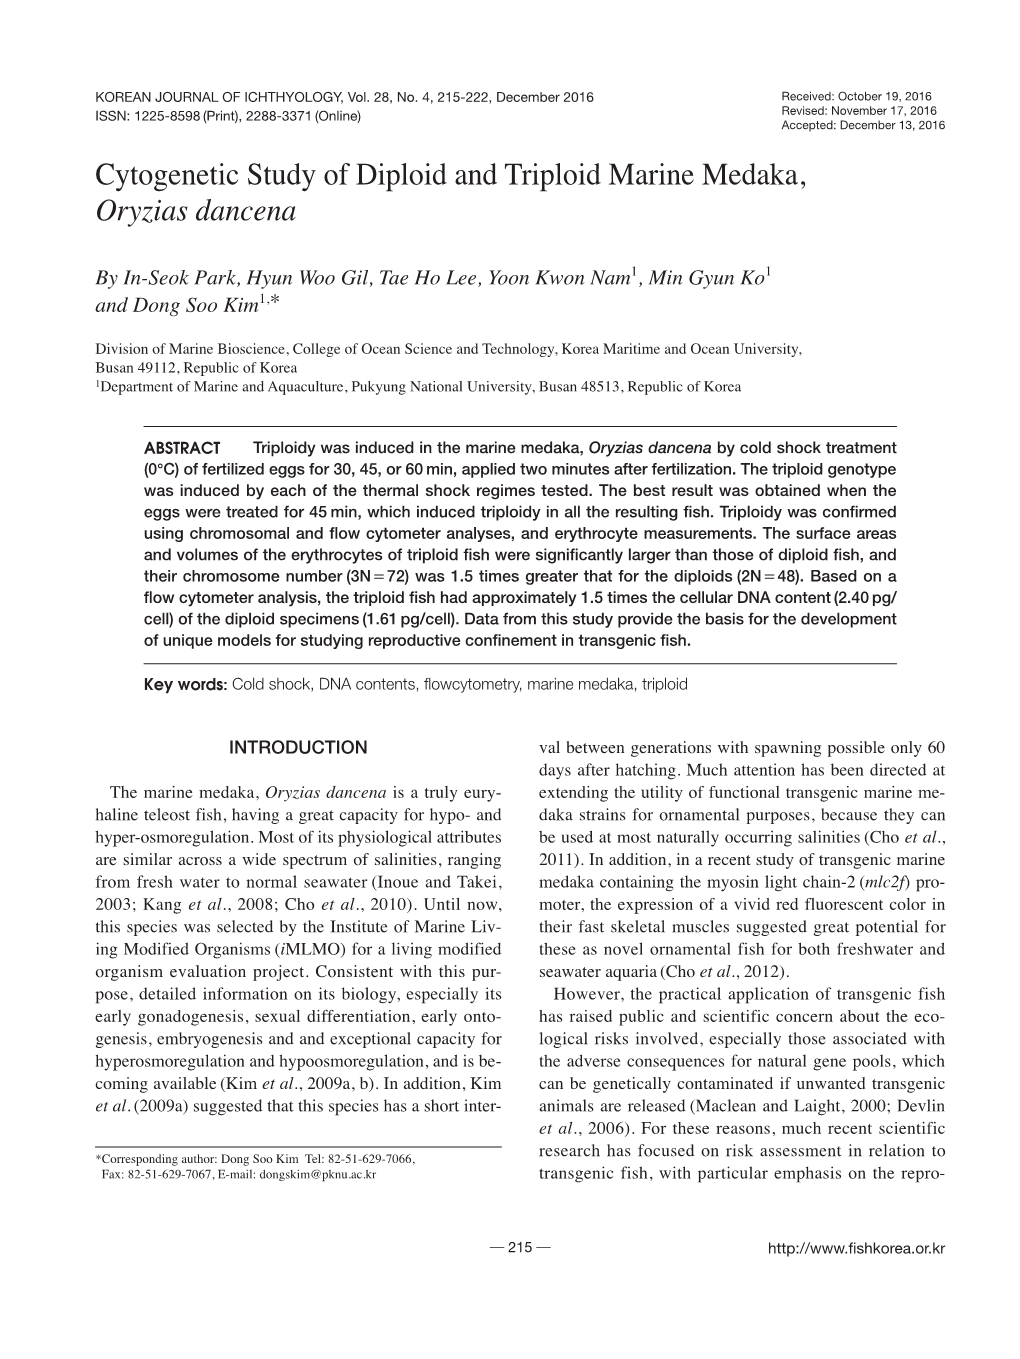 Cytogenetic Study of Diploid and Triploid Marine Medaka, Oryzias Dancena